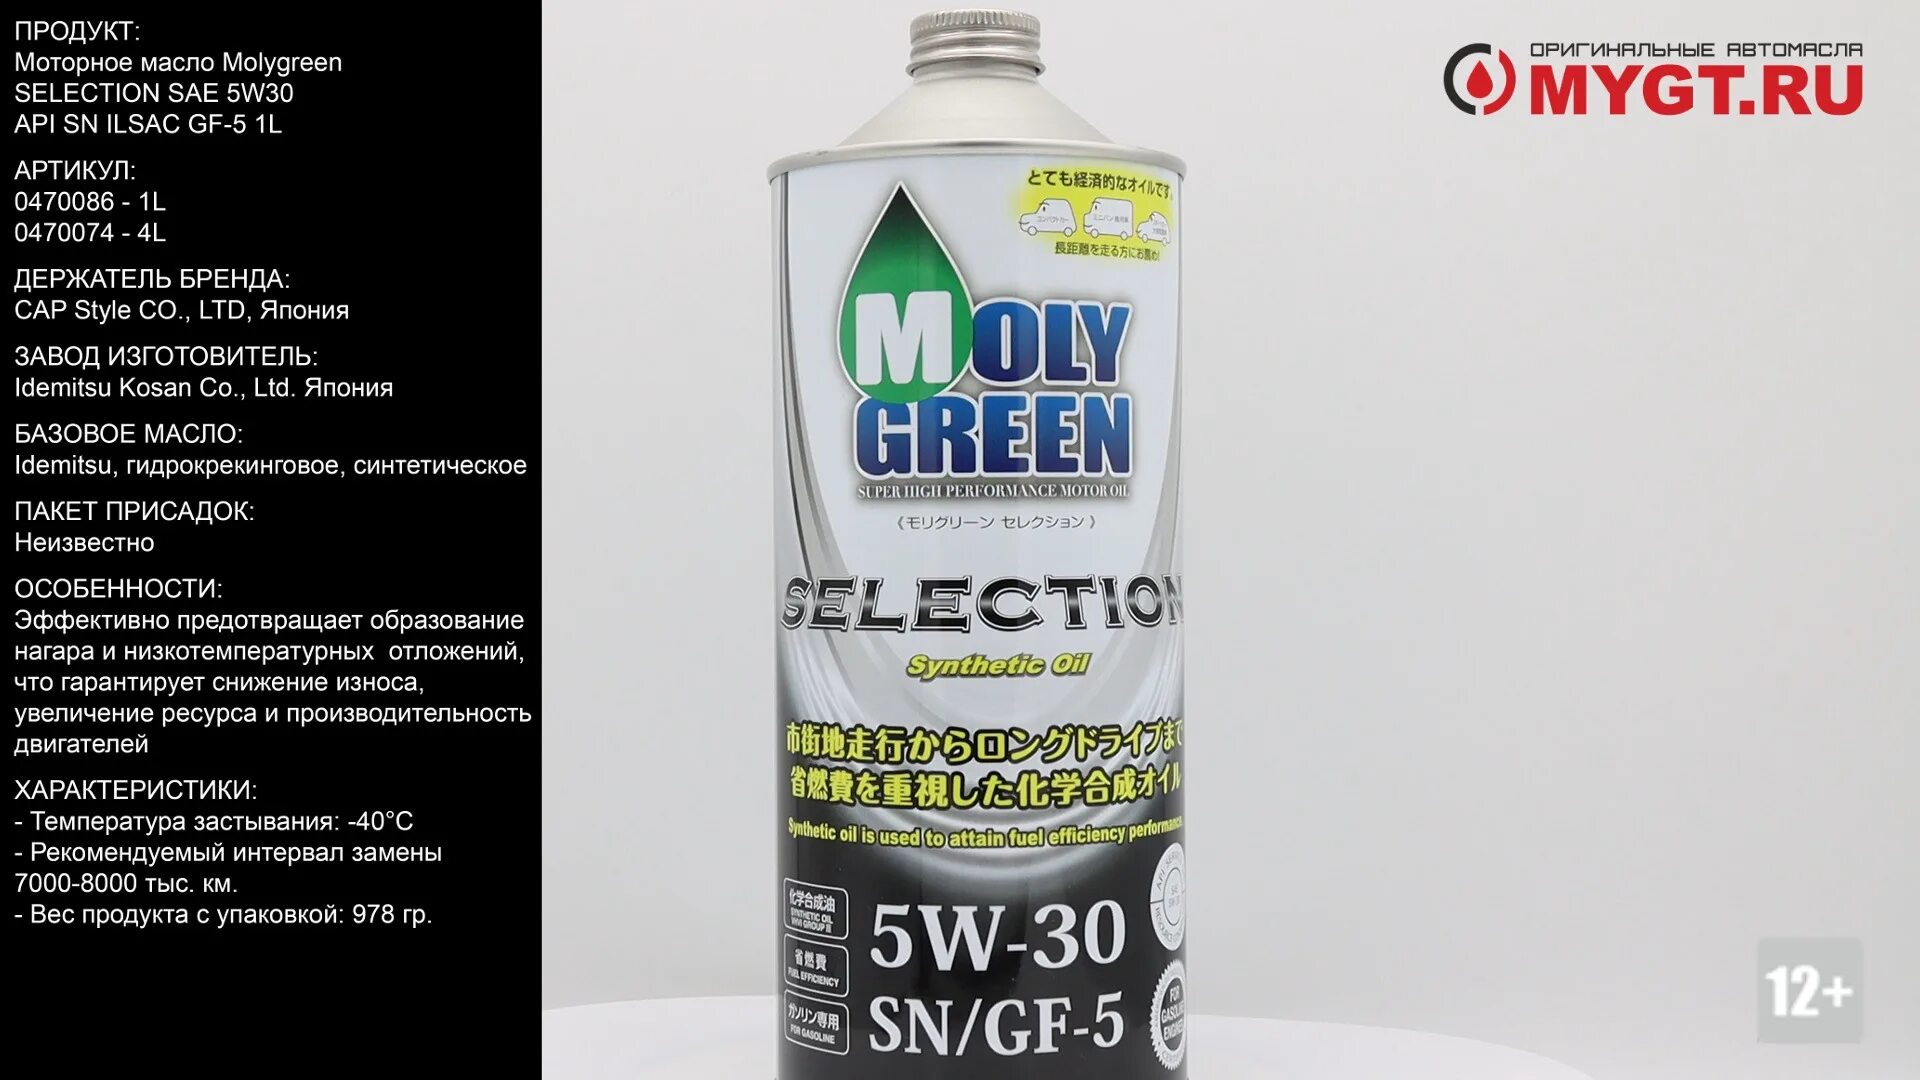 Моторное масло моли грин 5w30. Moly Green 5w30 selection. Масло Moly Green 5w30 selection. Moly Green selection 5w30 4л 0470074. Moly Green Premium Black SAE 5w-30 API SN ILSAC gf-5 4l 0470022.